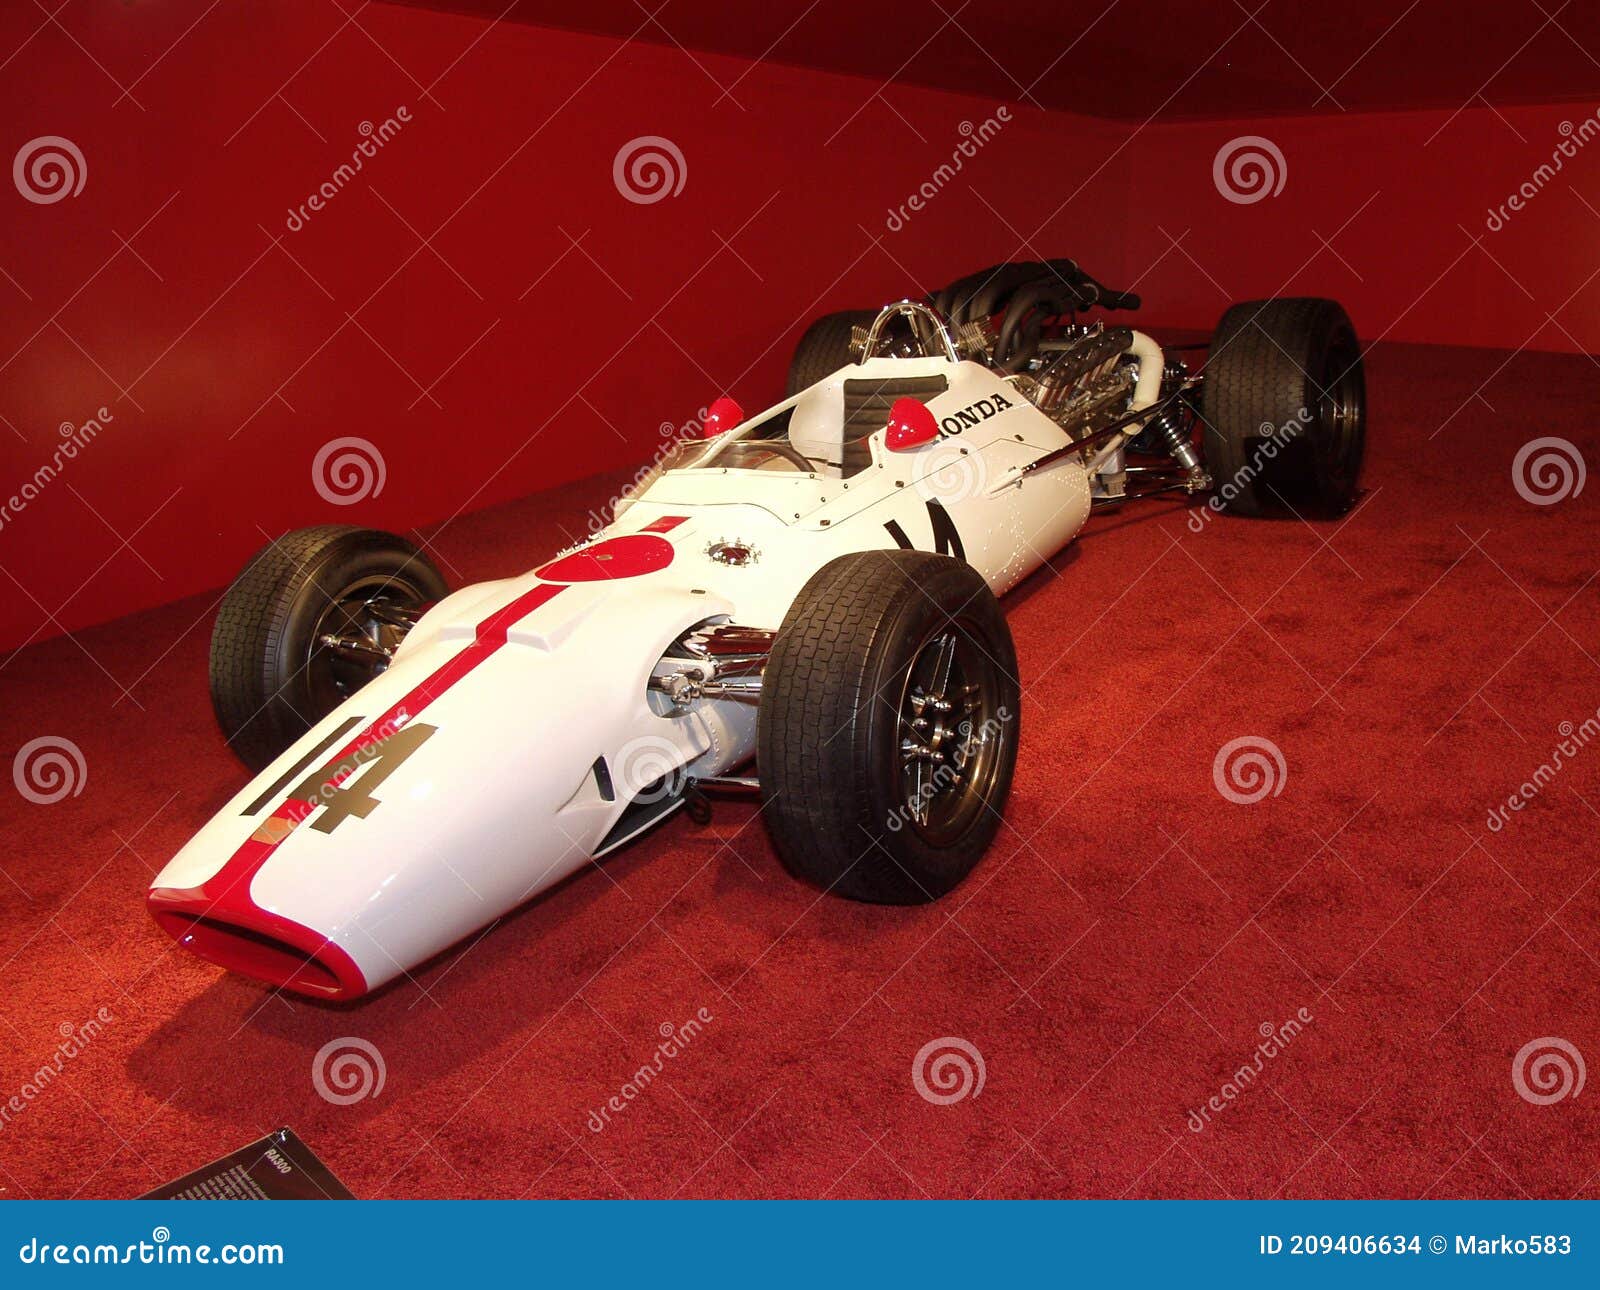 Honda RA300 F1 car editorial stock image. Image of cars - 209406634